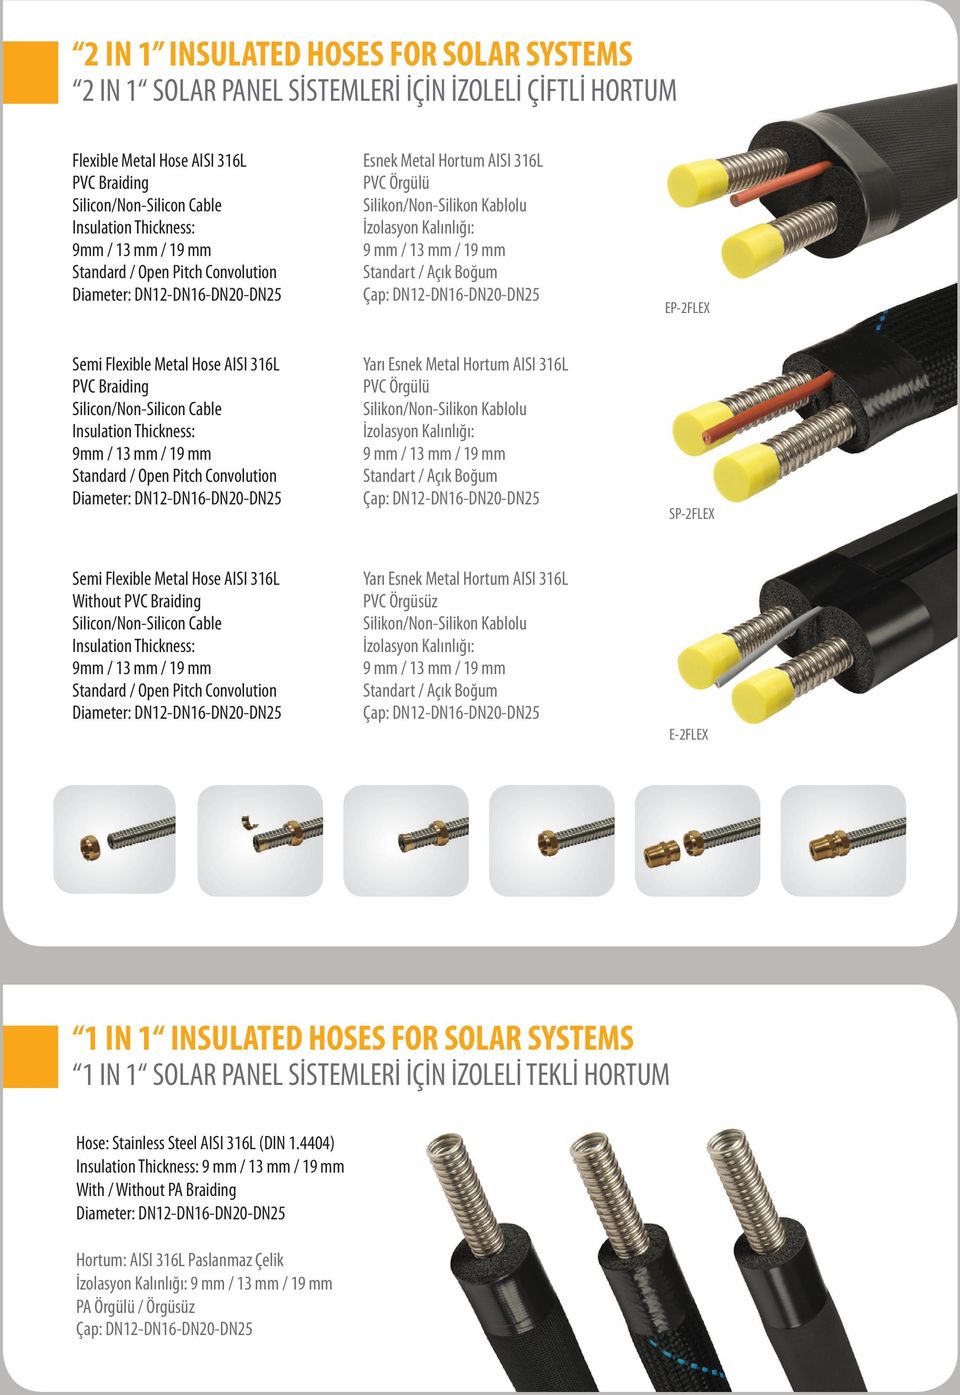 Metal Hose AISI 316L PVC Braiding Silicon/Non-Silicon Cable Insulation Thickness: 9mm / 13 mm / 19 mm Standard / Open Pitch Convolution Yarı Esnek Metal Hortum AISI 316L PVC Örgülü